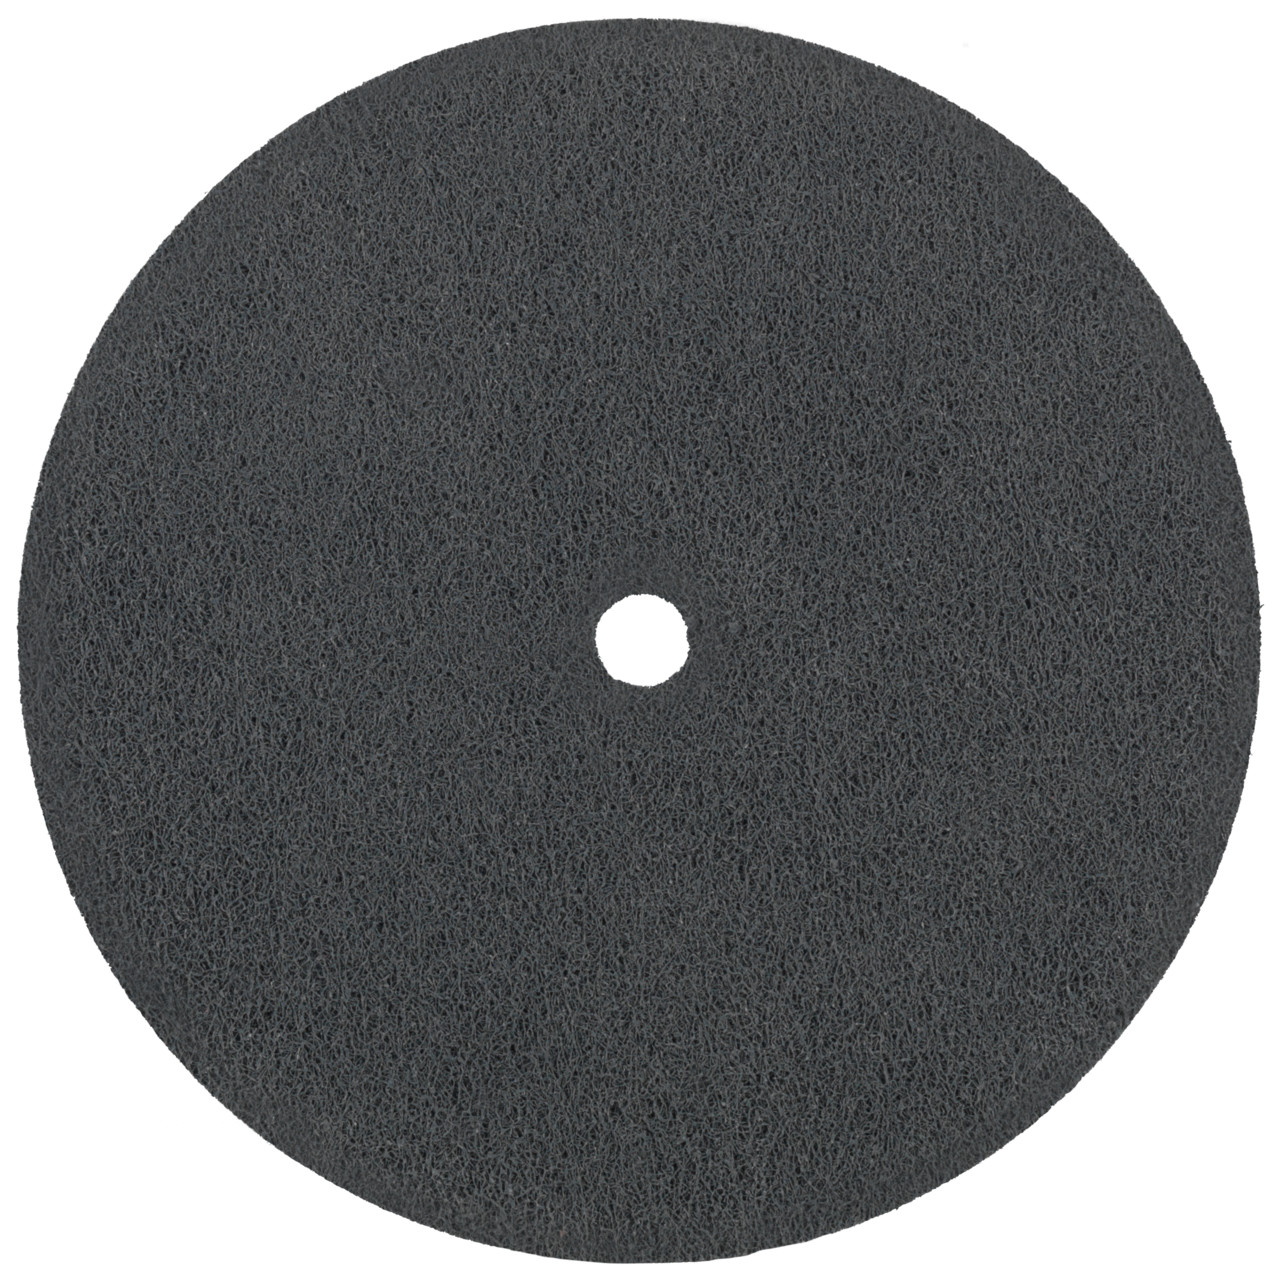 Tyrolit Discos compactos prensados DxDxH 152x13x12,7 Inserto universal, 3 C FEIN, forma: 1, Art. 34190292